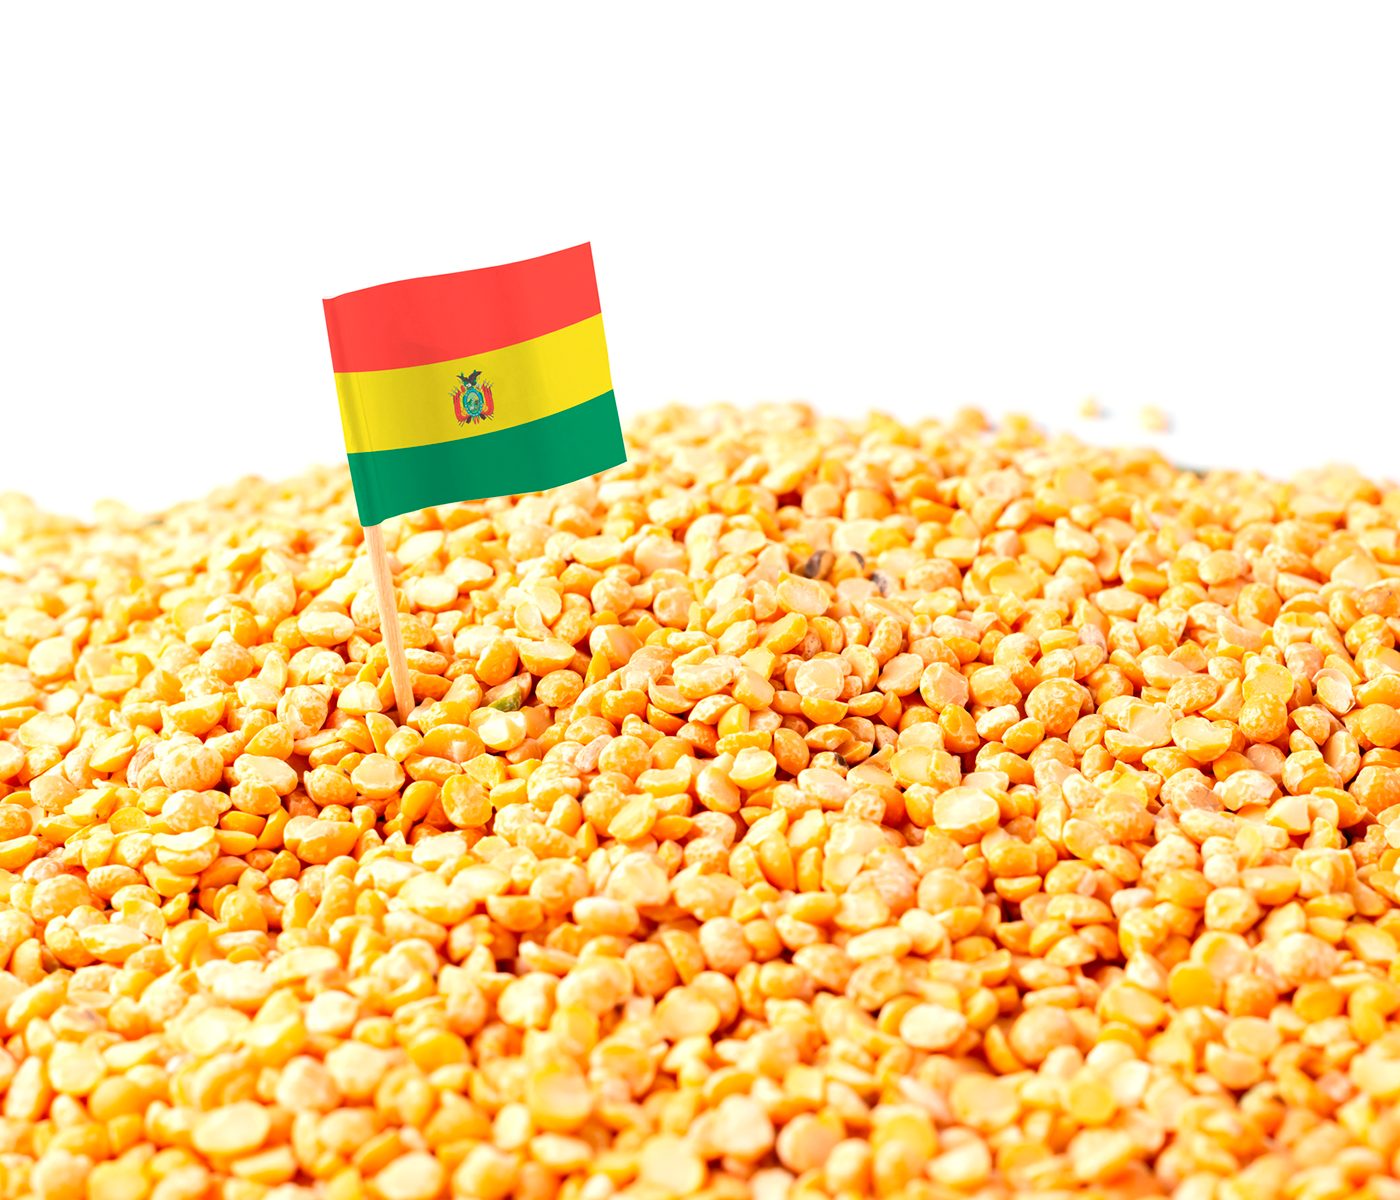 Bolivia aumentó exportación de soya en ocho meses